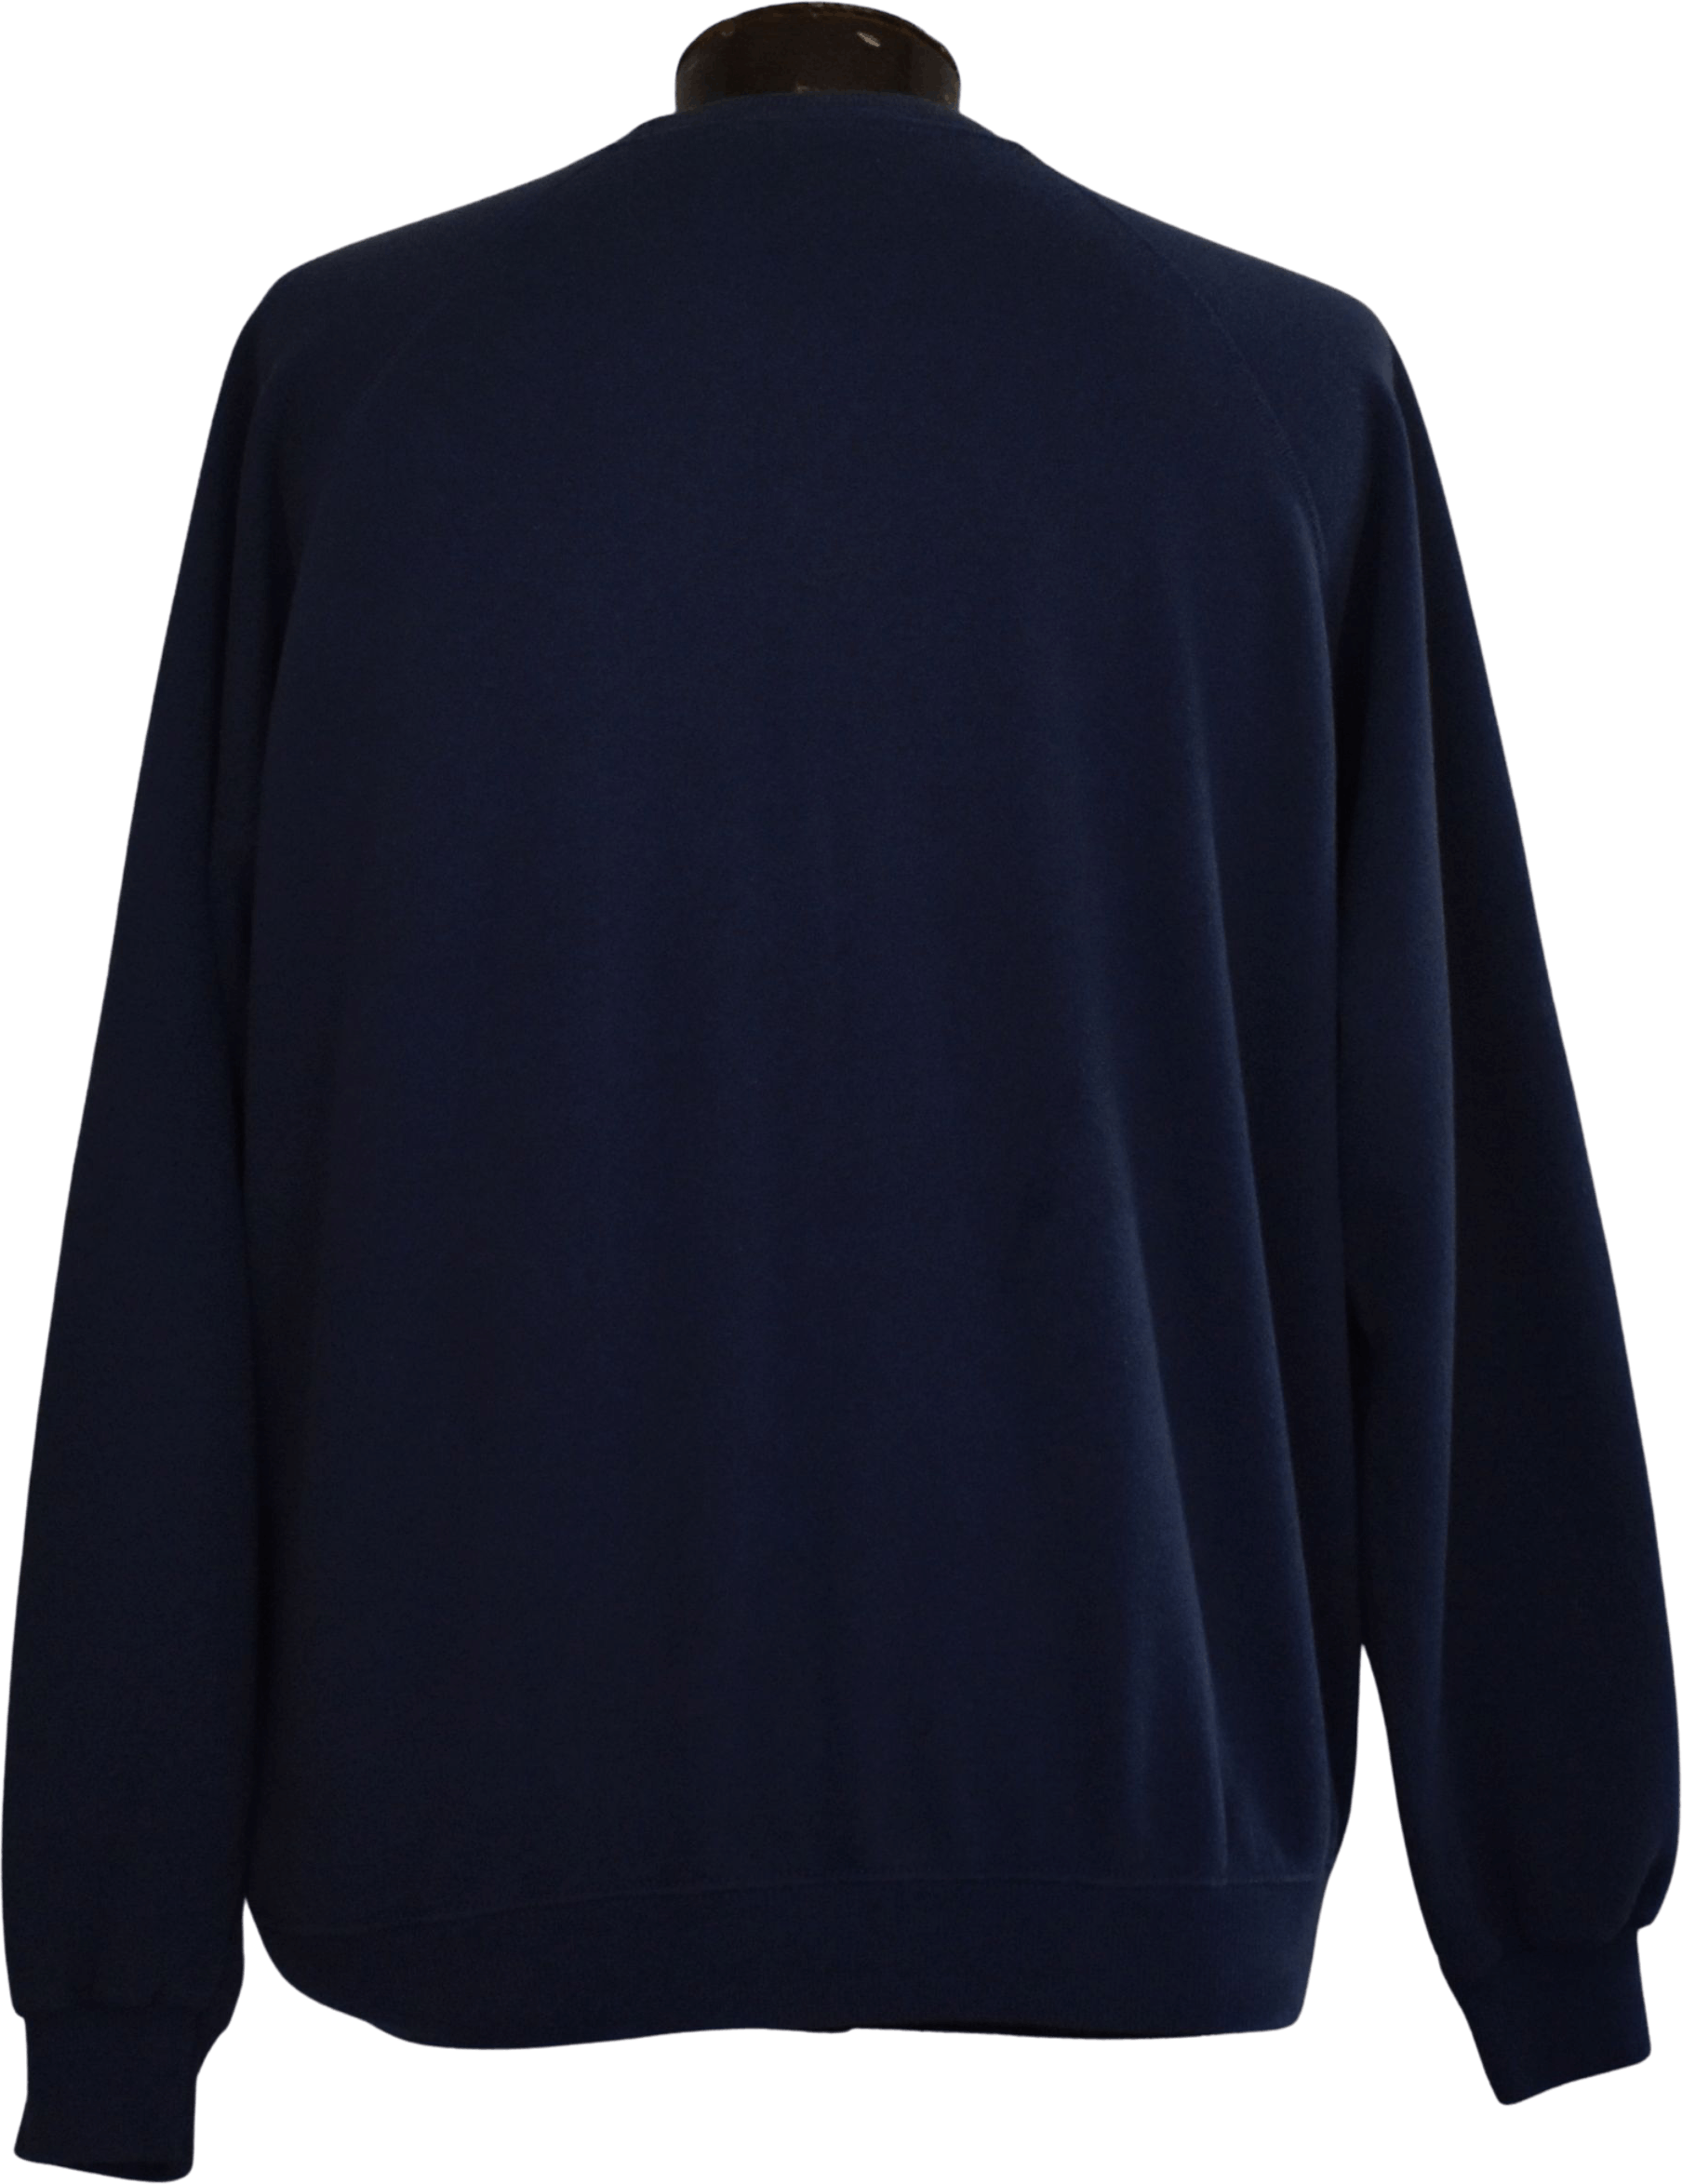 Vintage 80's Eagles Are Forever Raglan Sweatshirt by Hanes | Shop THRILLING